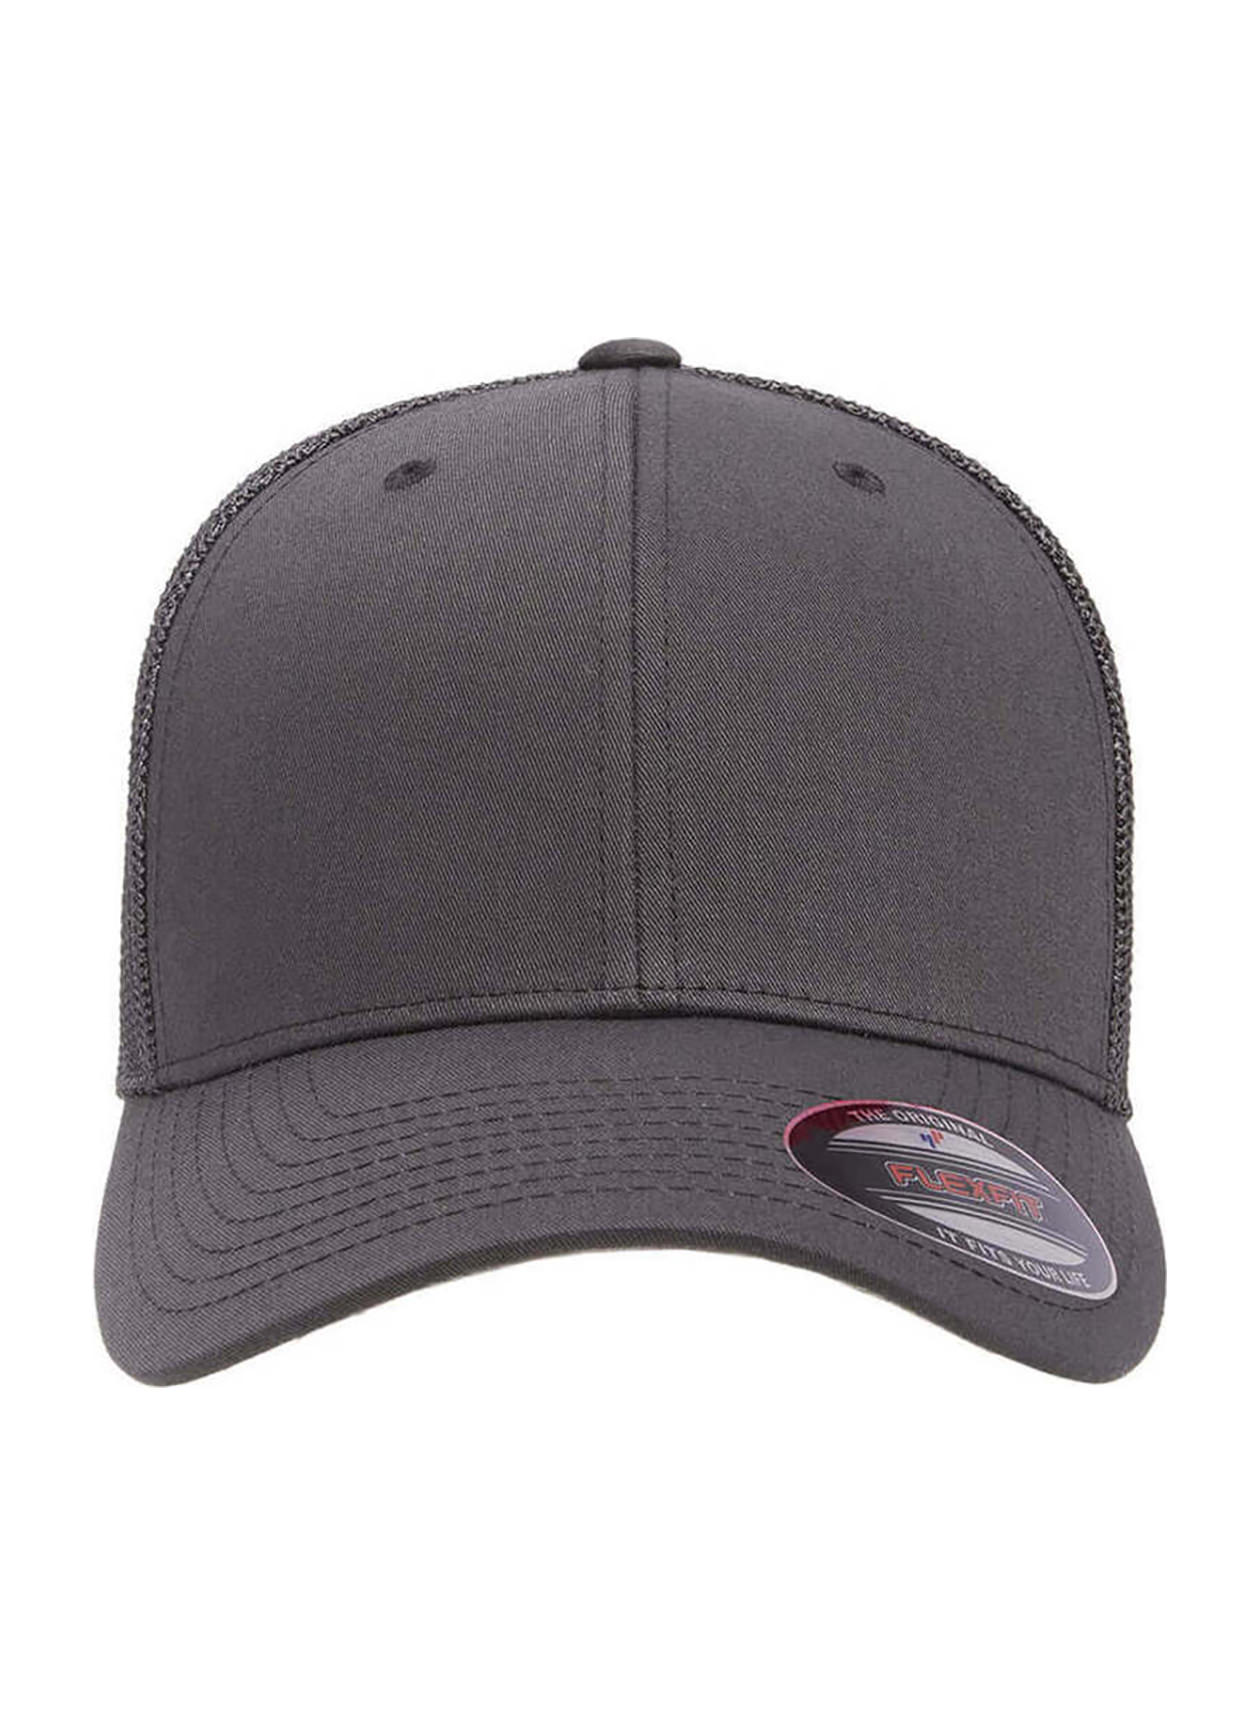 Flexfit Charcoal 6-Panel Trucker Hat